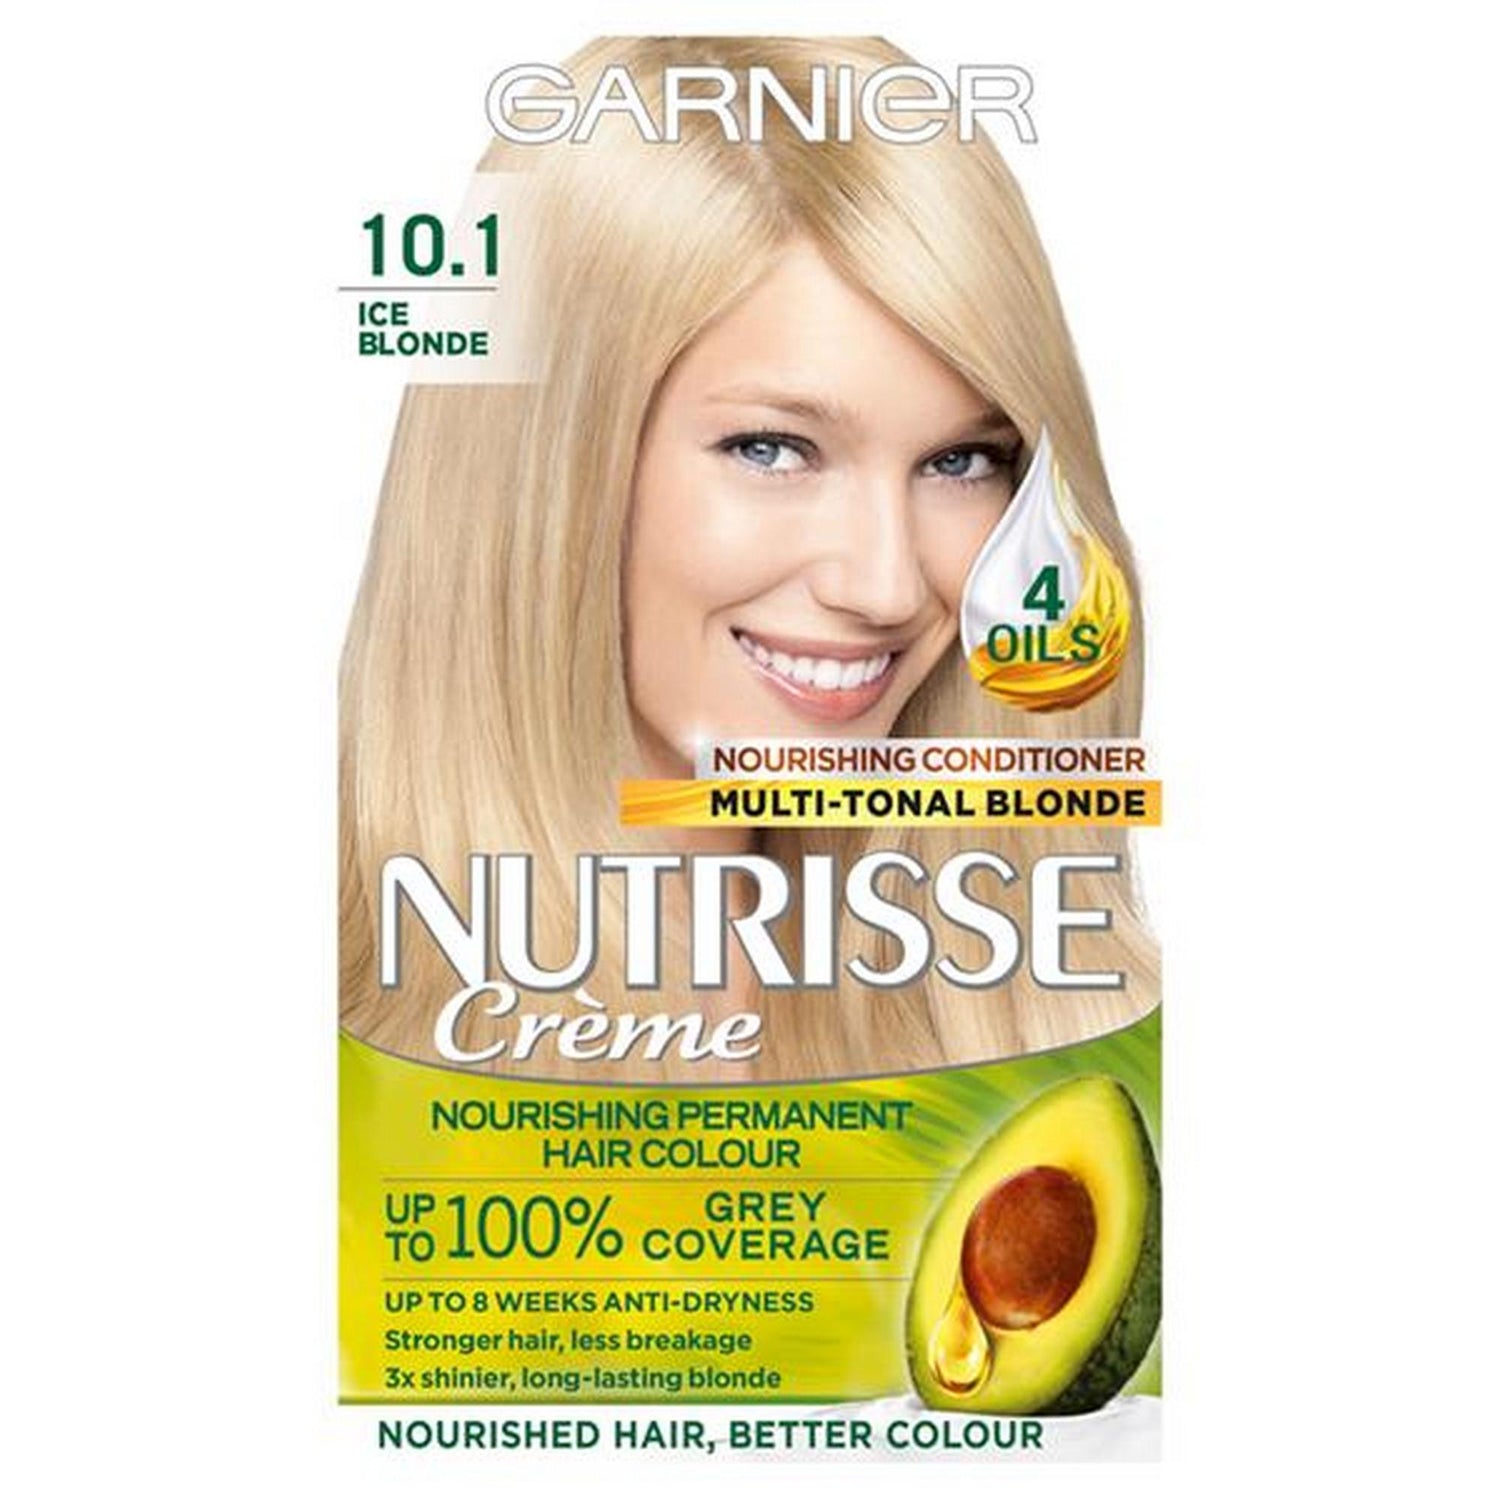 Garnier Nutrisse Ultra Crème Permanent Hair Dye Ice Blonde